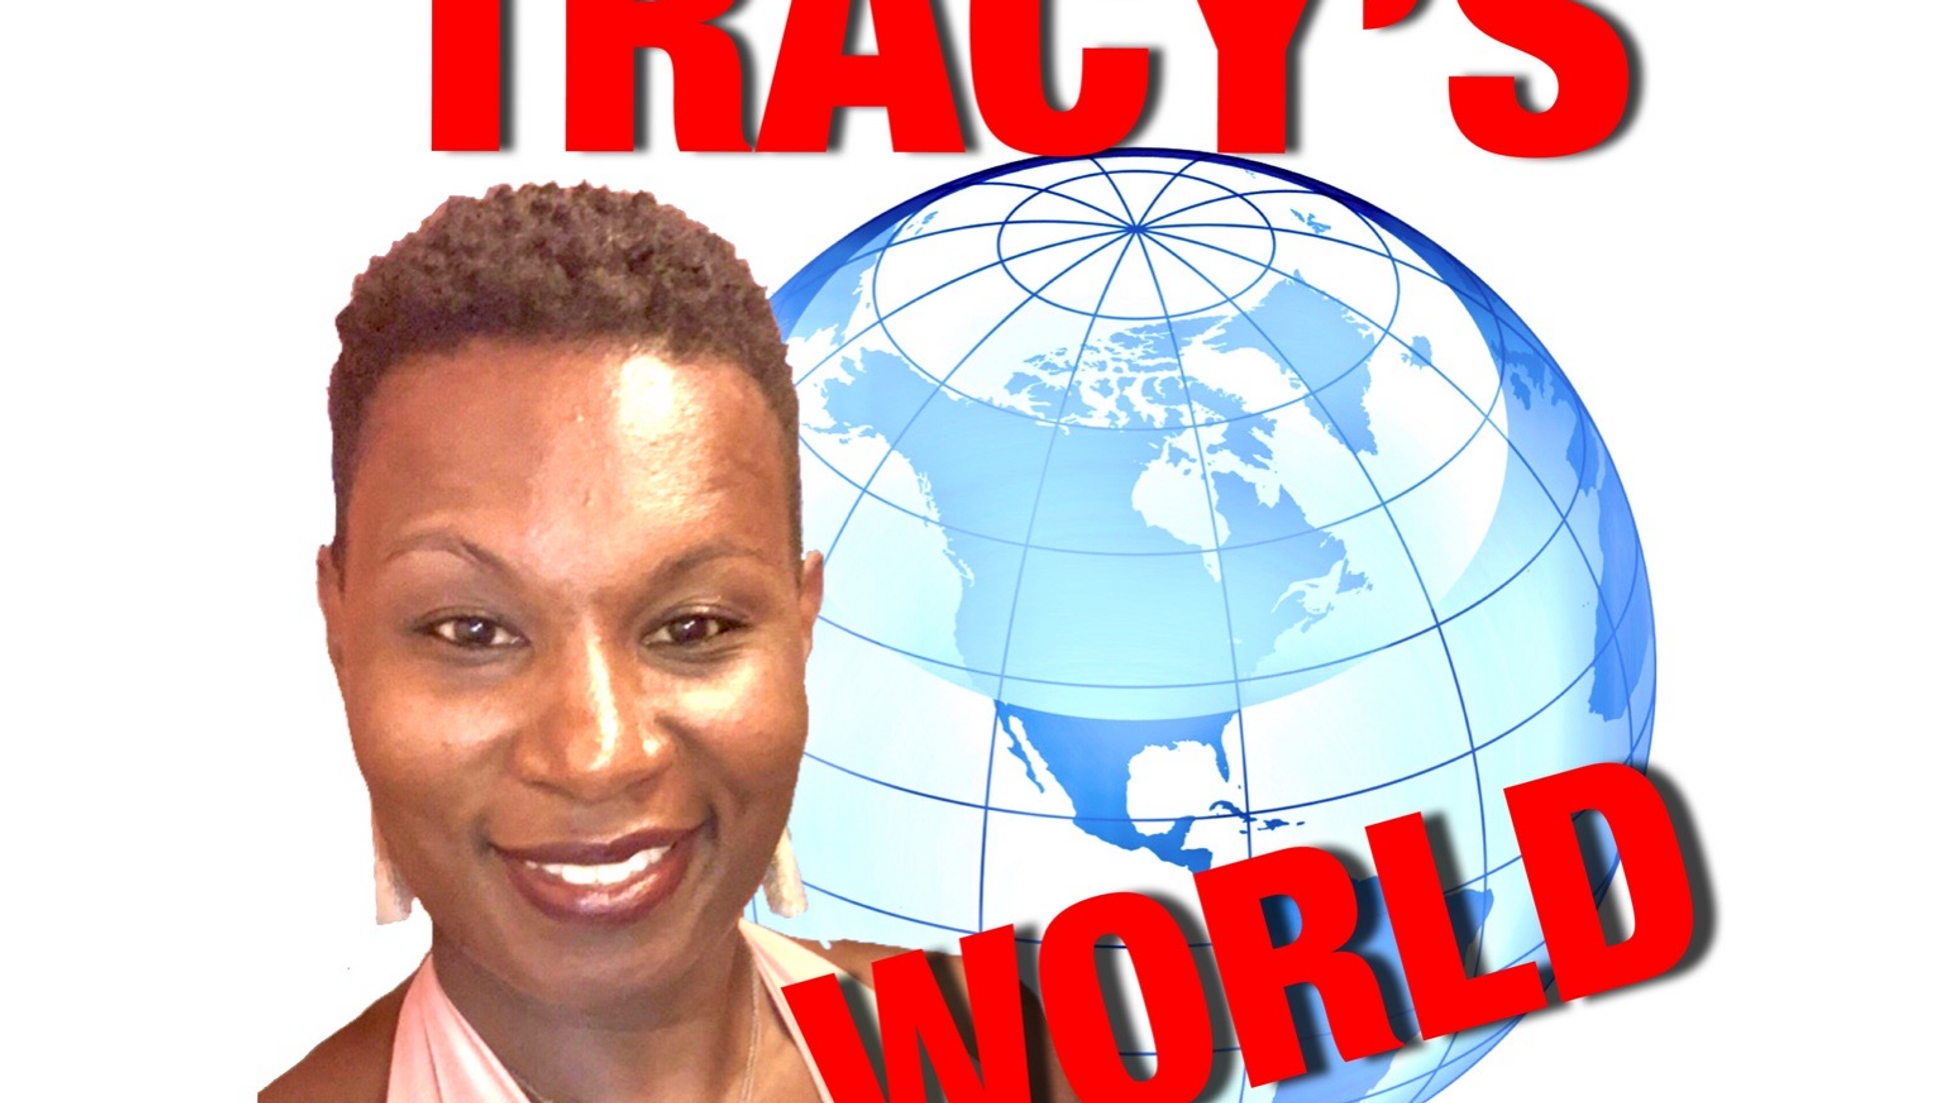 Tracy WORLDWIDE